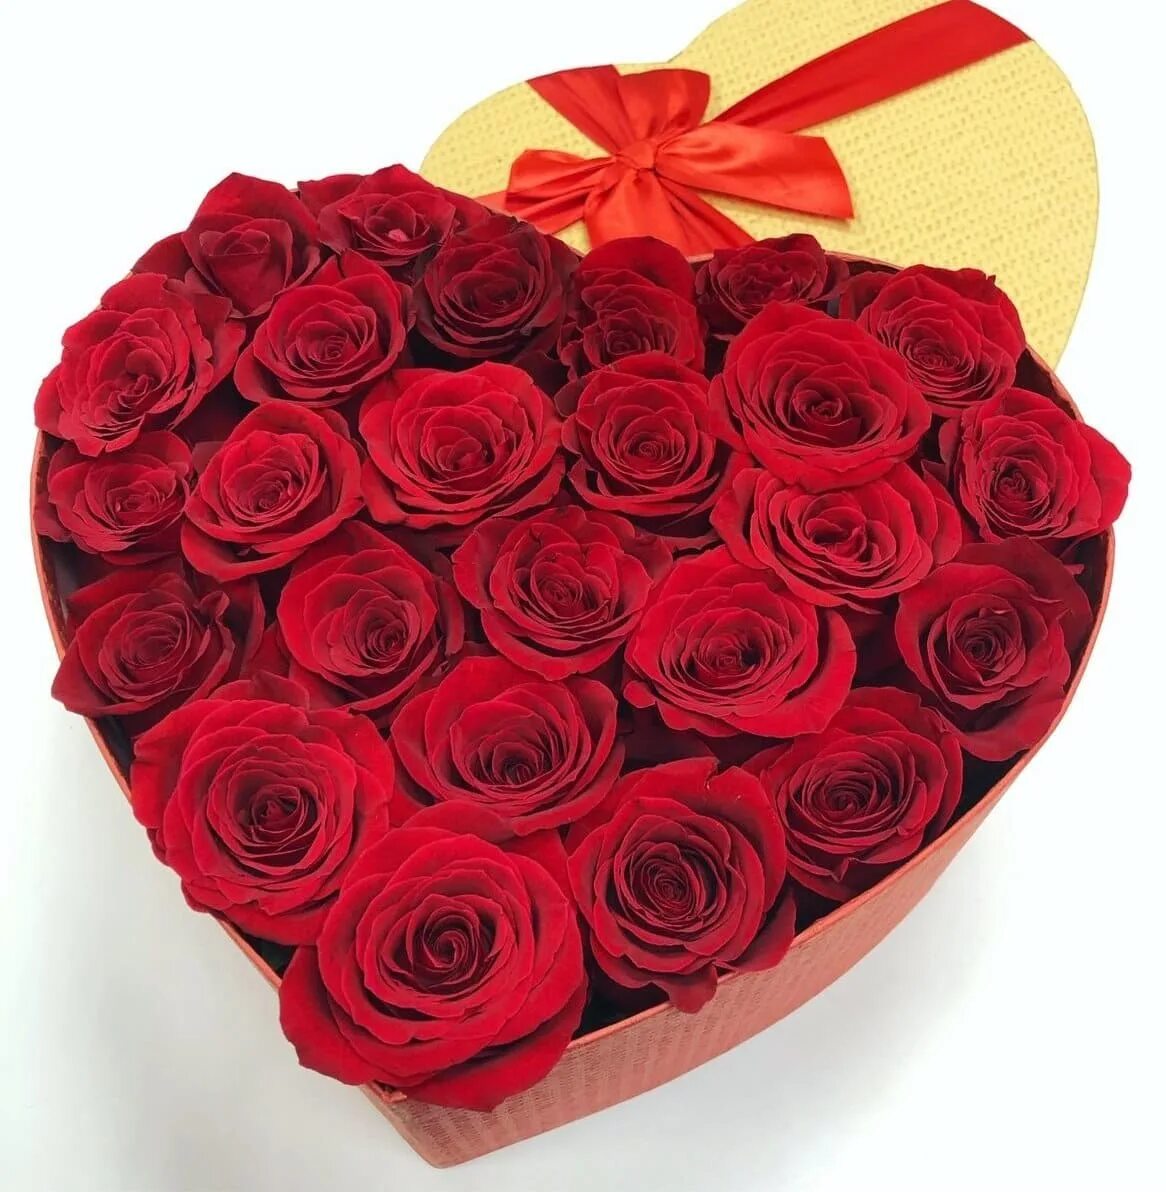 Букет роз недорого москва. Розы в коробке "сердце". Красные розы в коробке сердце. 25 Красных роз. Букет 25 красных роз.